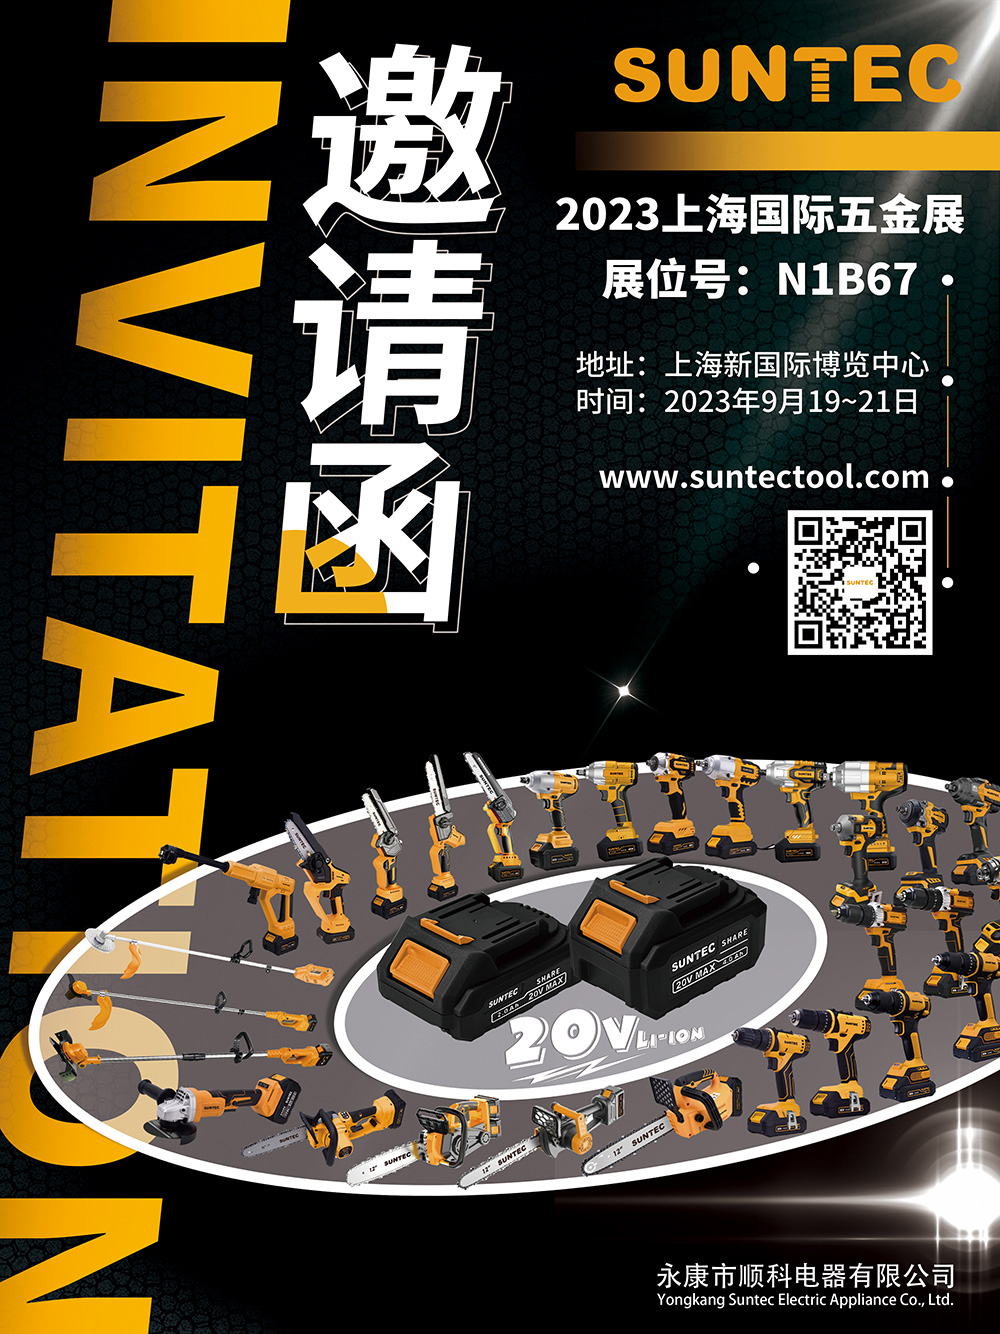 Welcome to China International Hardware Show 2023